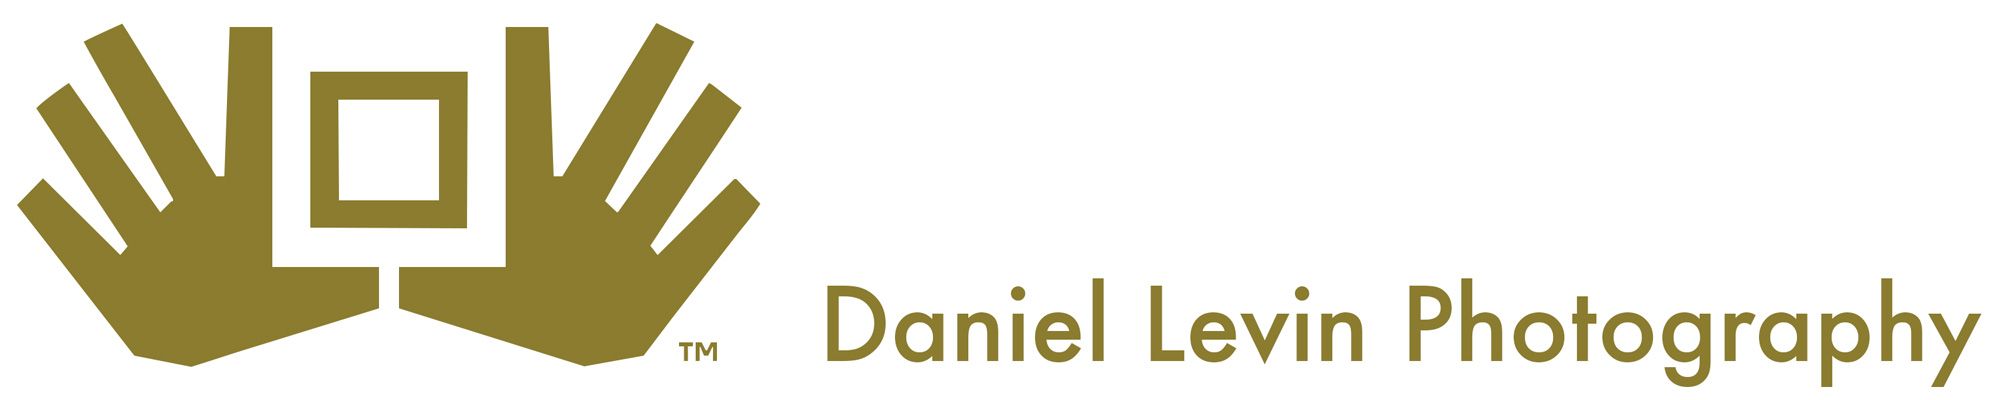 Daniel Levin Photography - splash logo